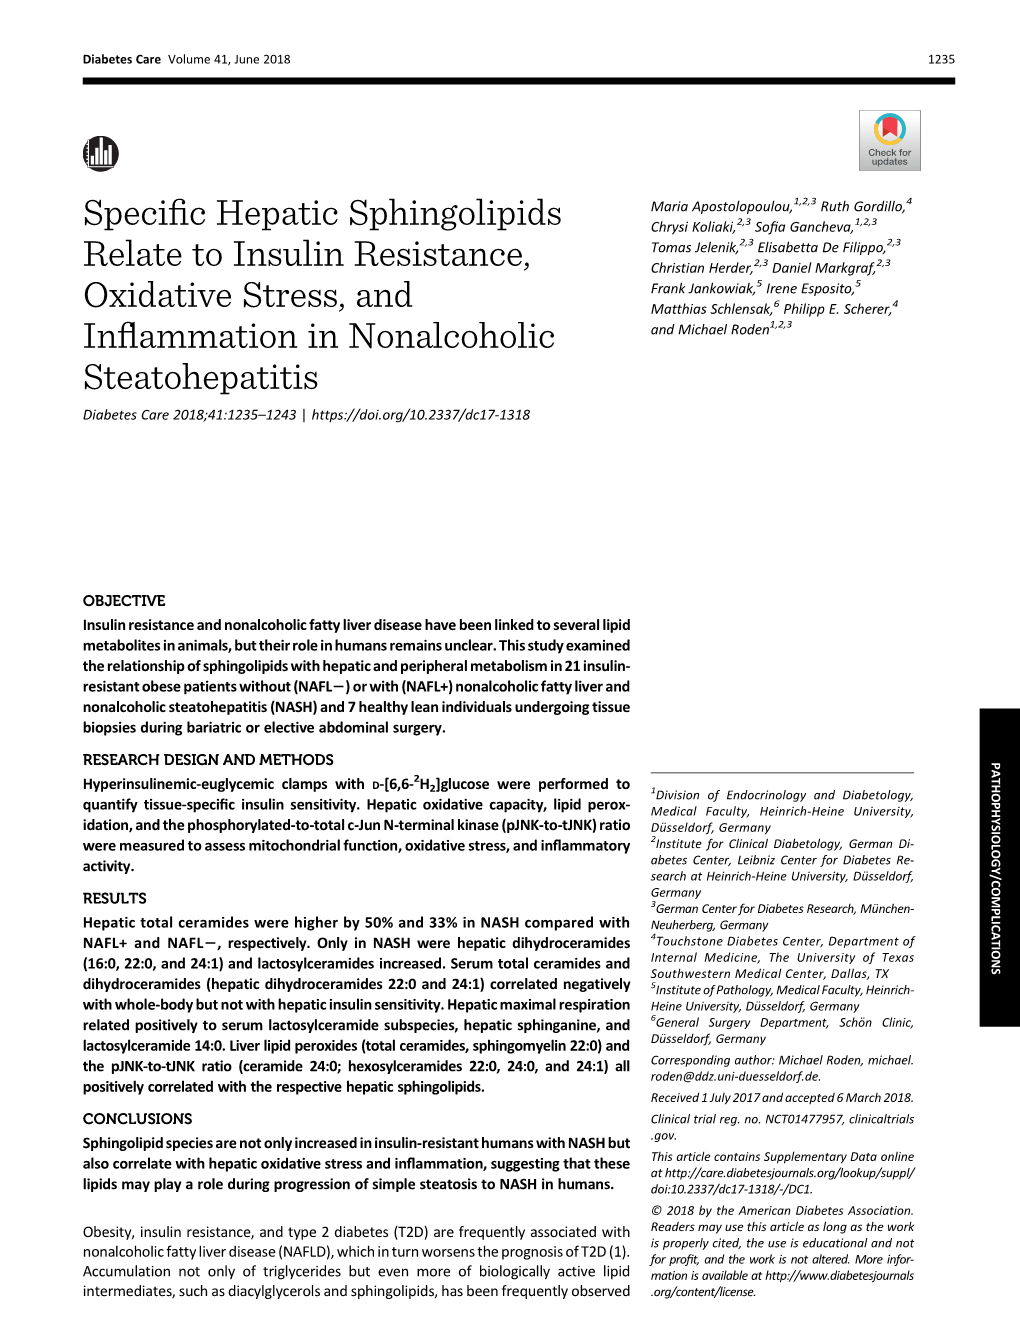 Specific Hepatic Sphingolipids Relate to Insulin Resistance, Oxidative